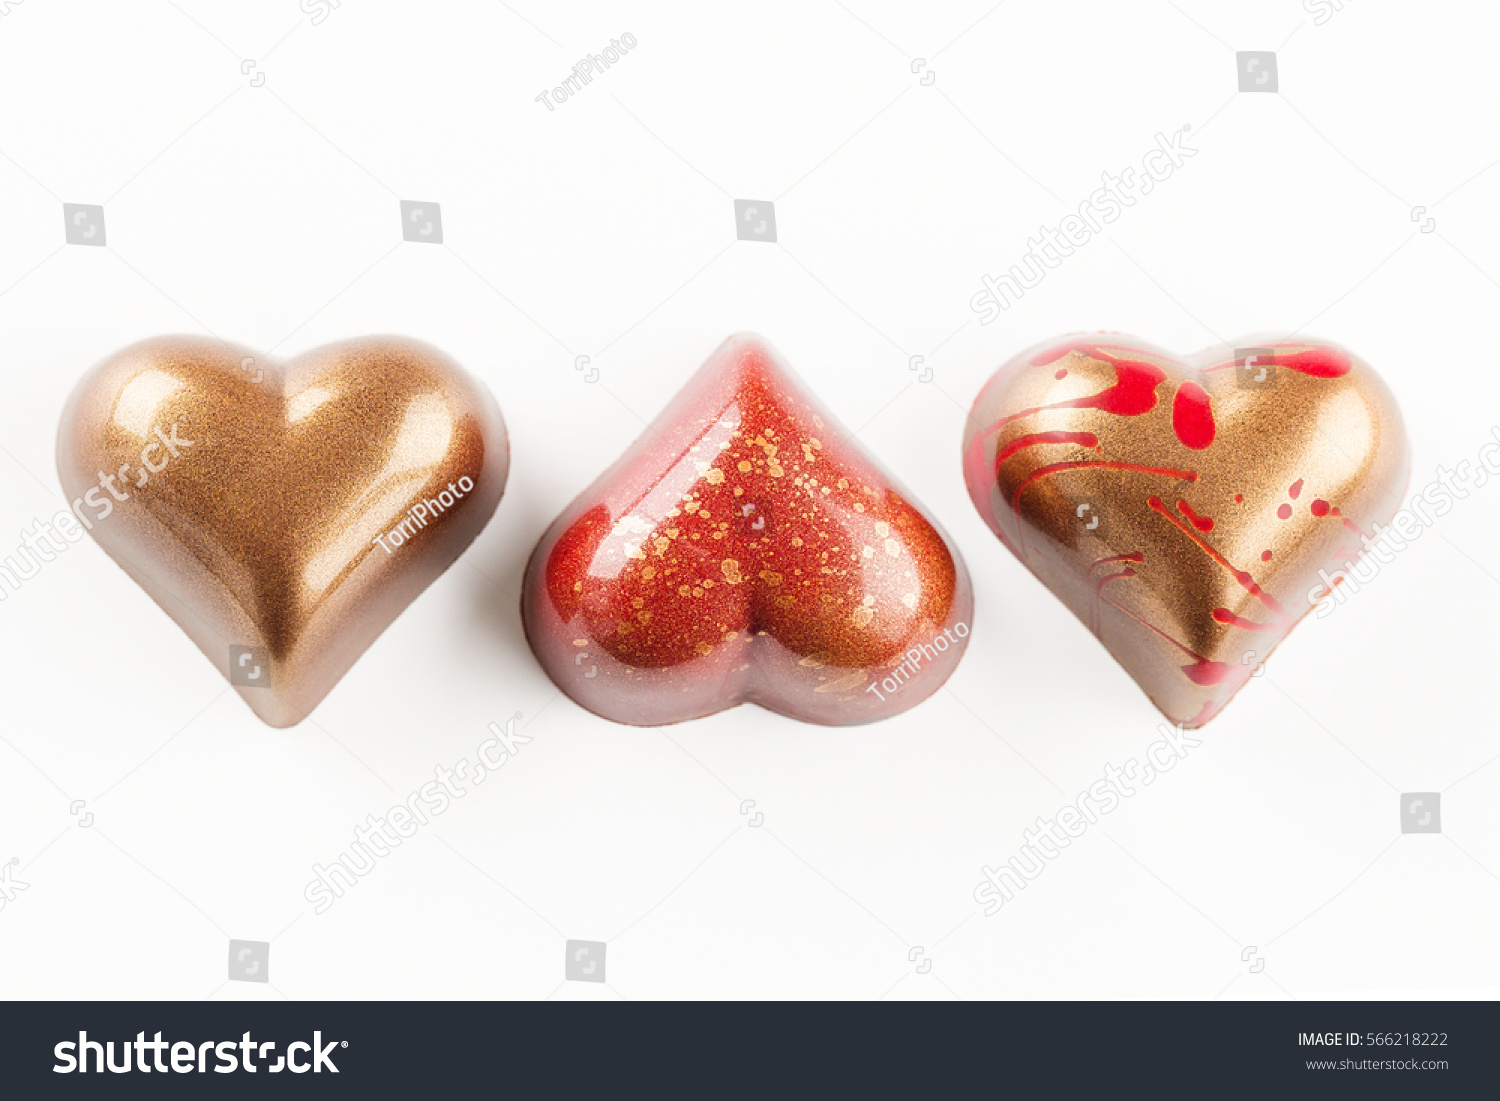 https://www.shutterstock.com/image-photo/red-gold-heart-shaped-handmade-candies-566218222